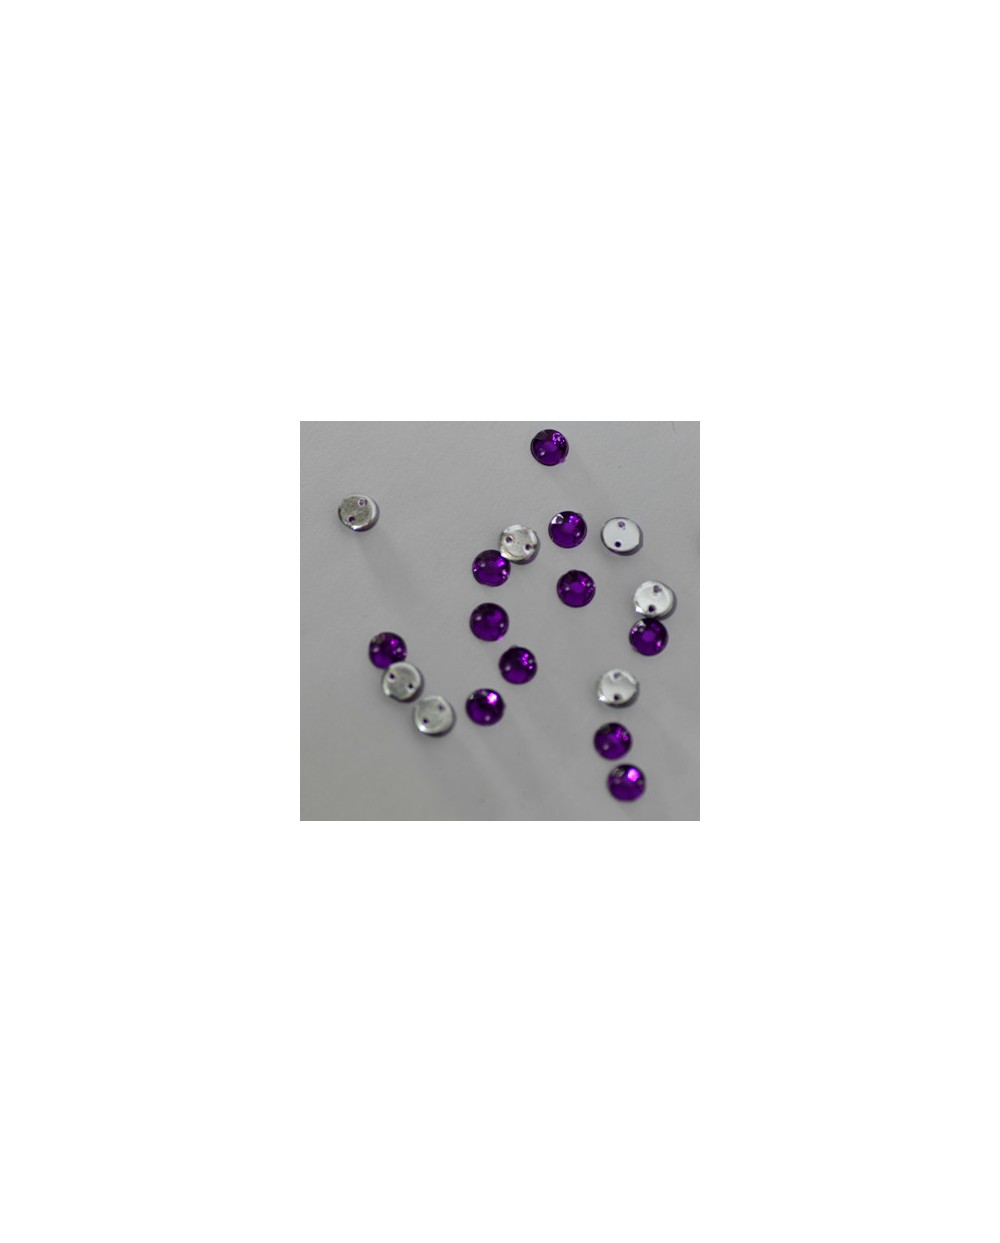 Perle plate 6 mm Violette